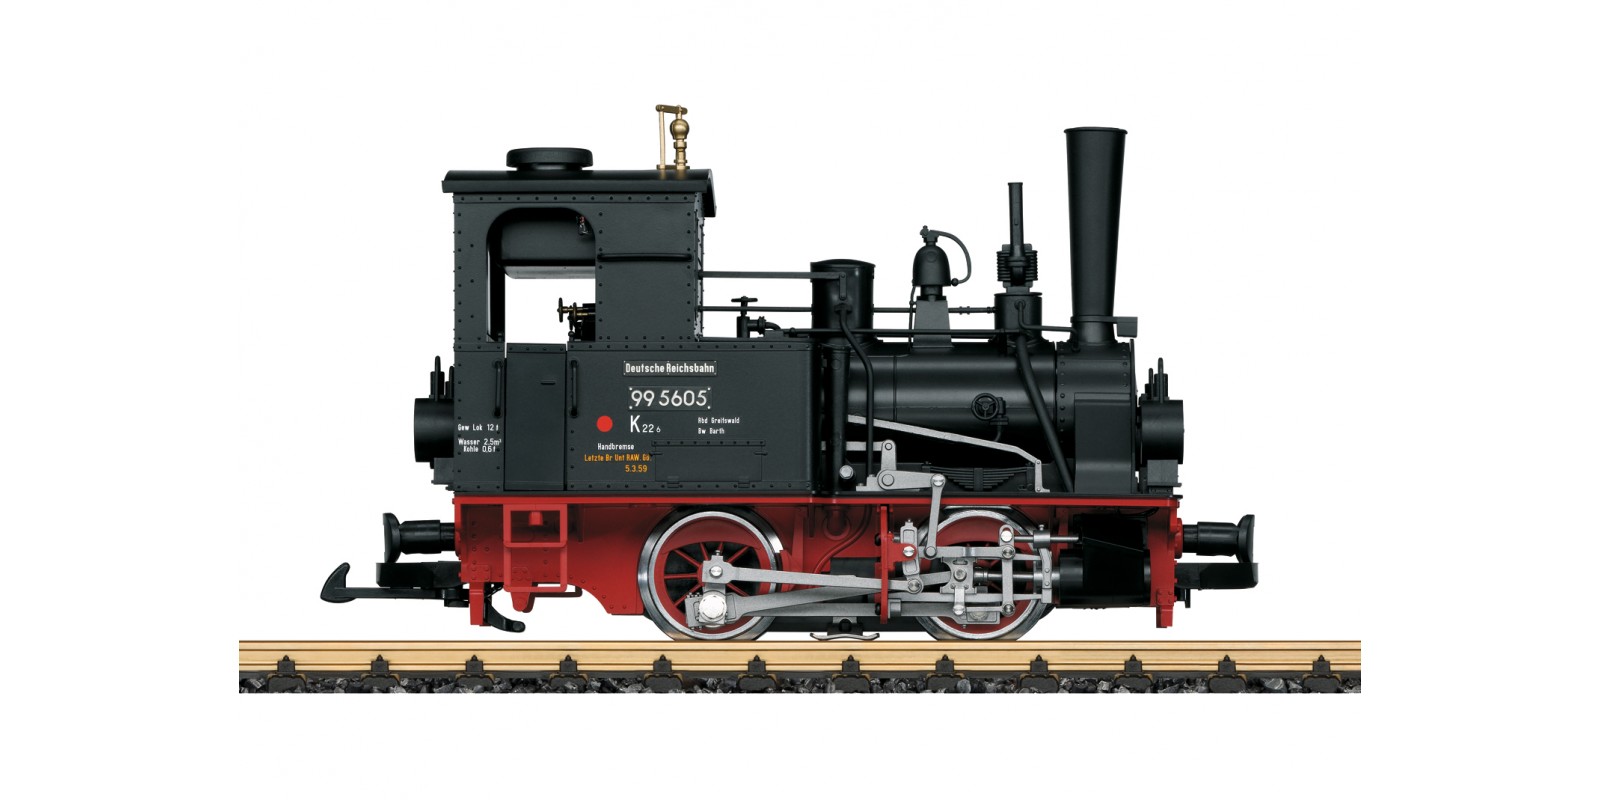 L20184 Steam Locomotive, Road Number 99 5605